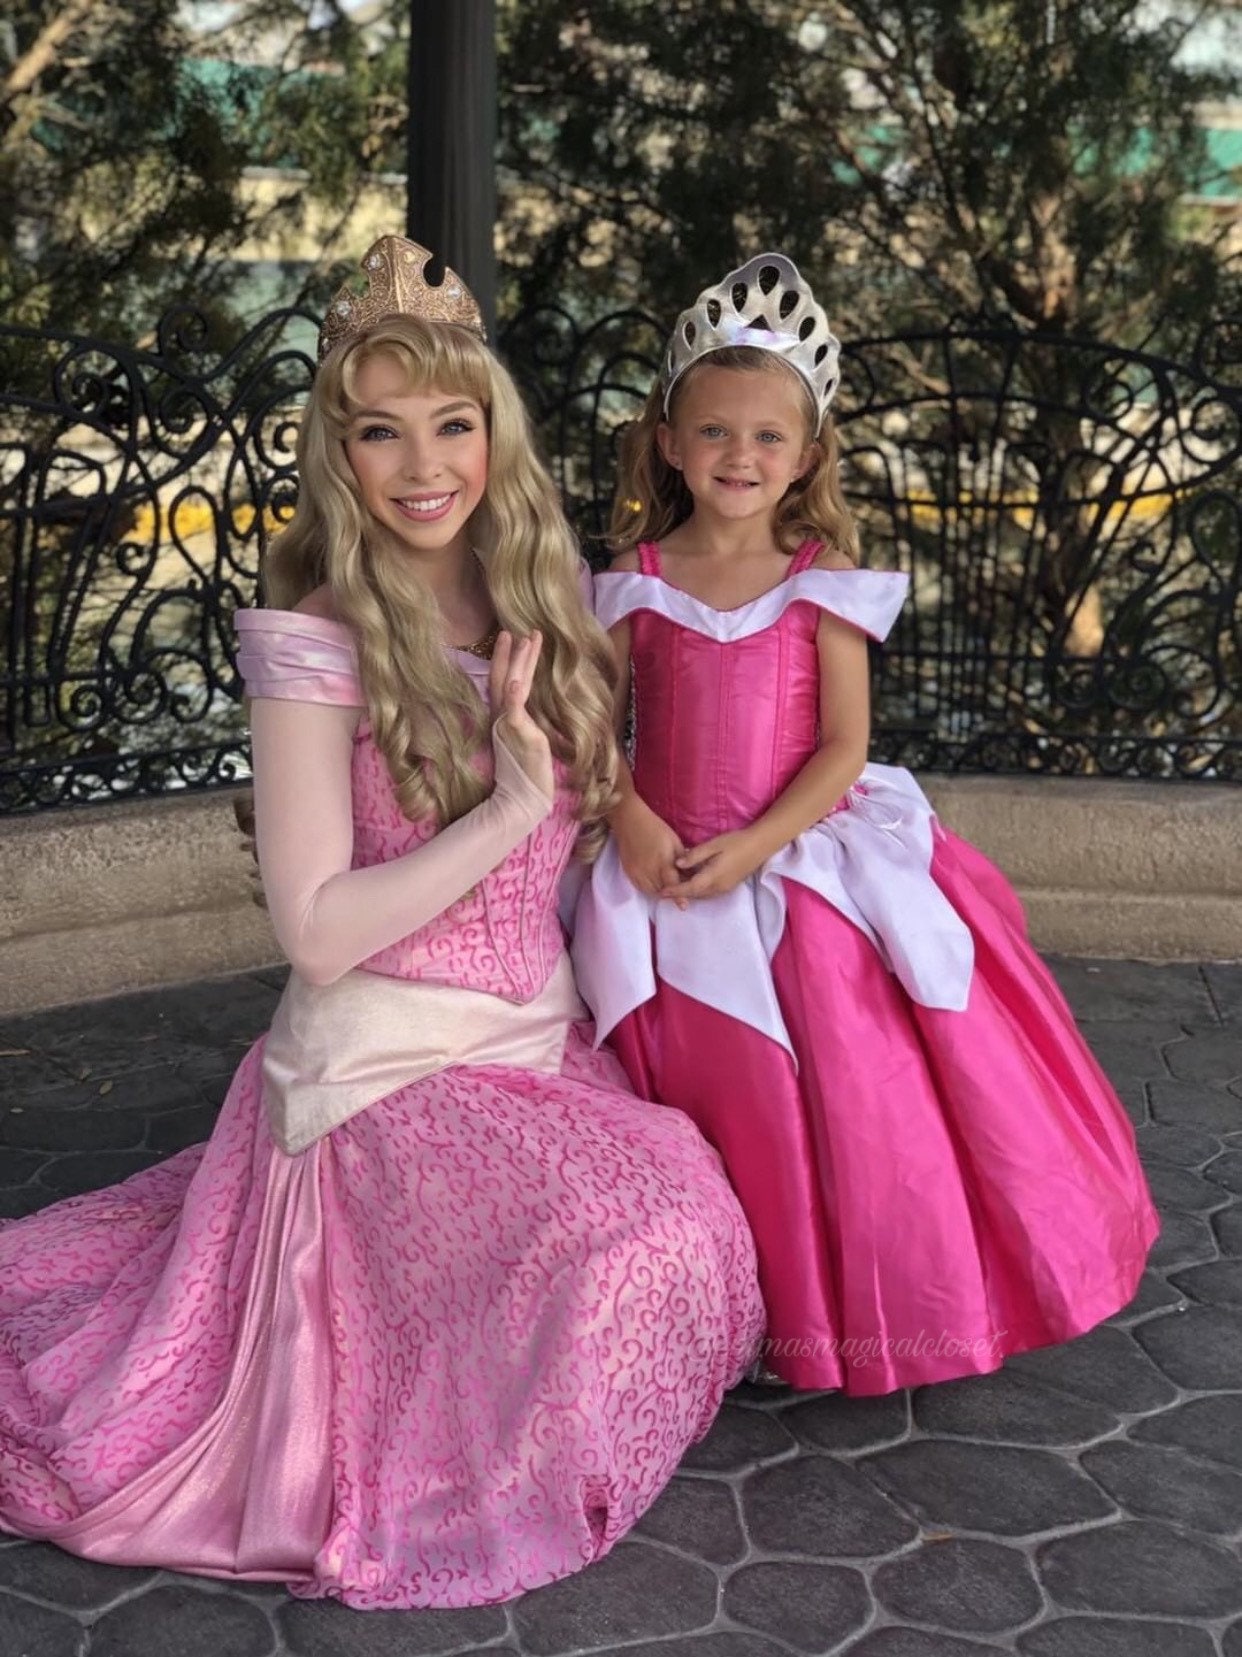 Disney Princess Aurora Tiara to Toe Dress up Set, Girls' Costume